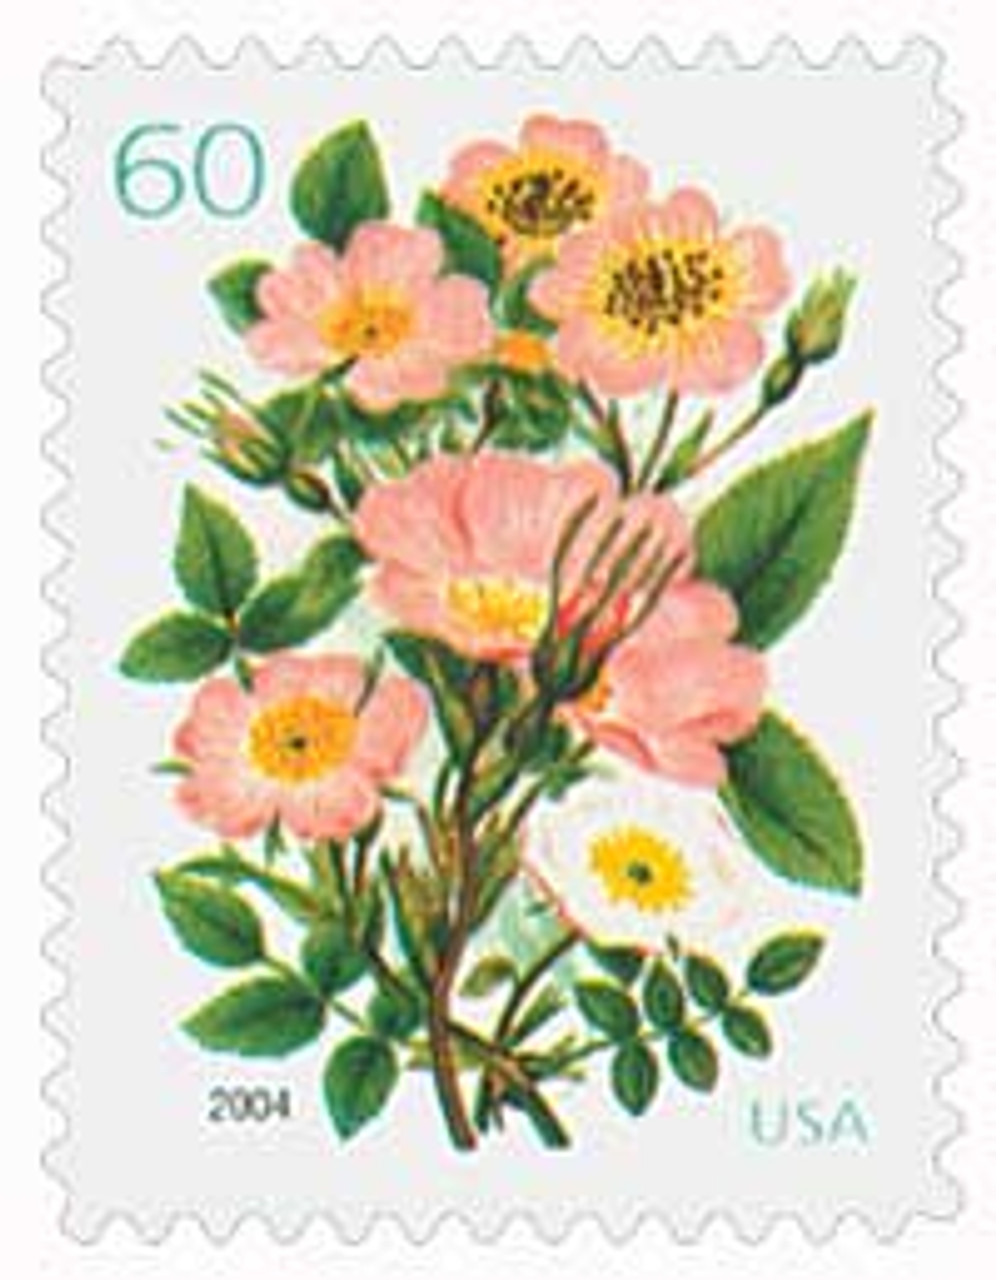 6 Australia Botanical Vintage Postage Stamps, Flower, Plants